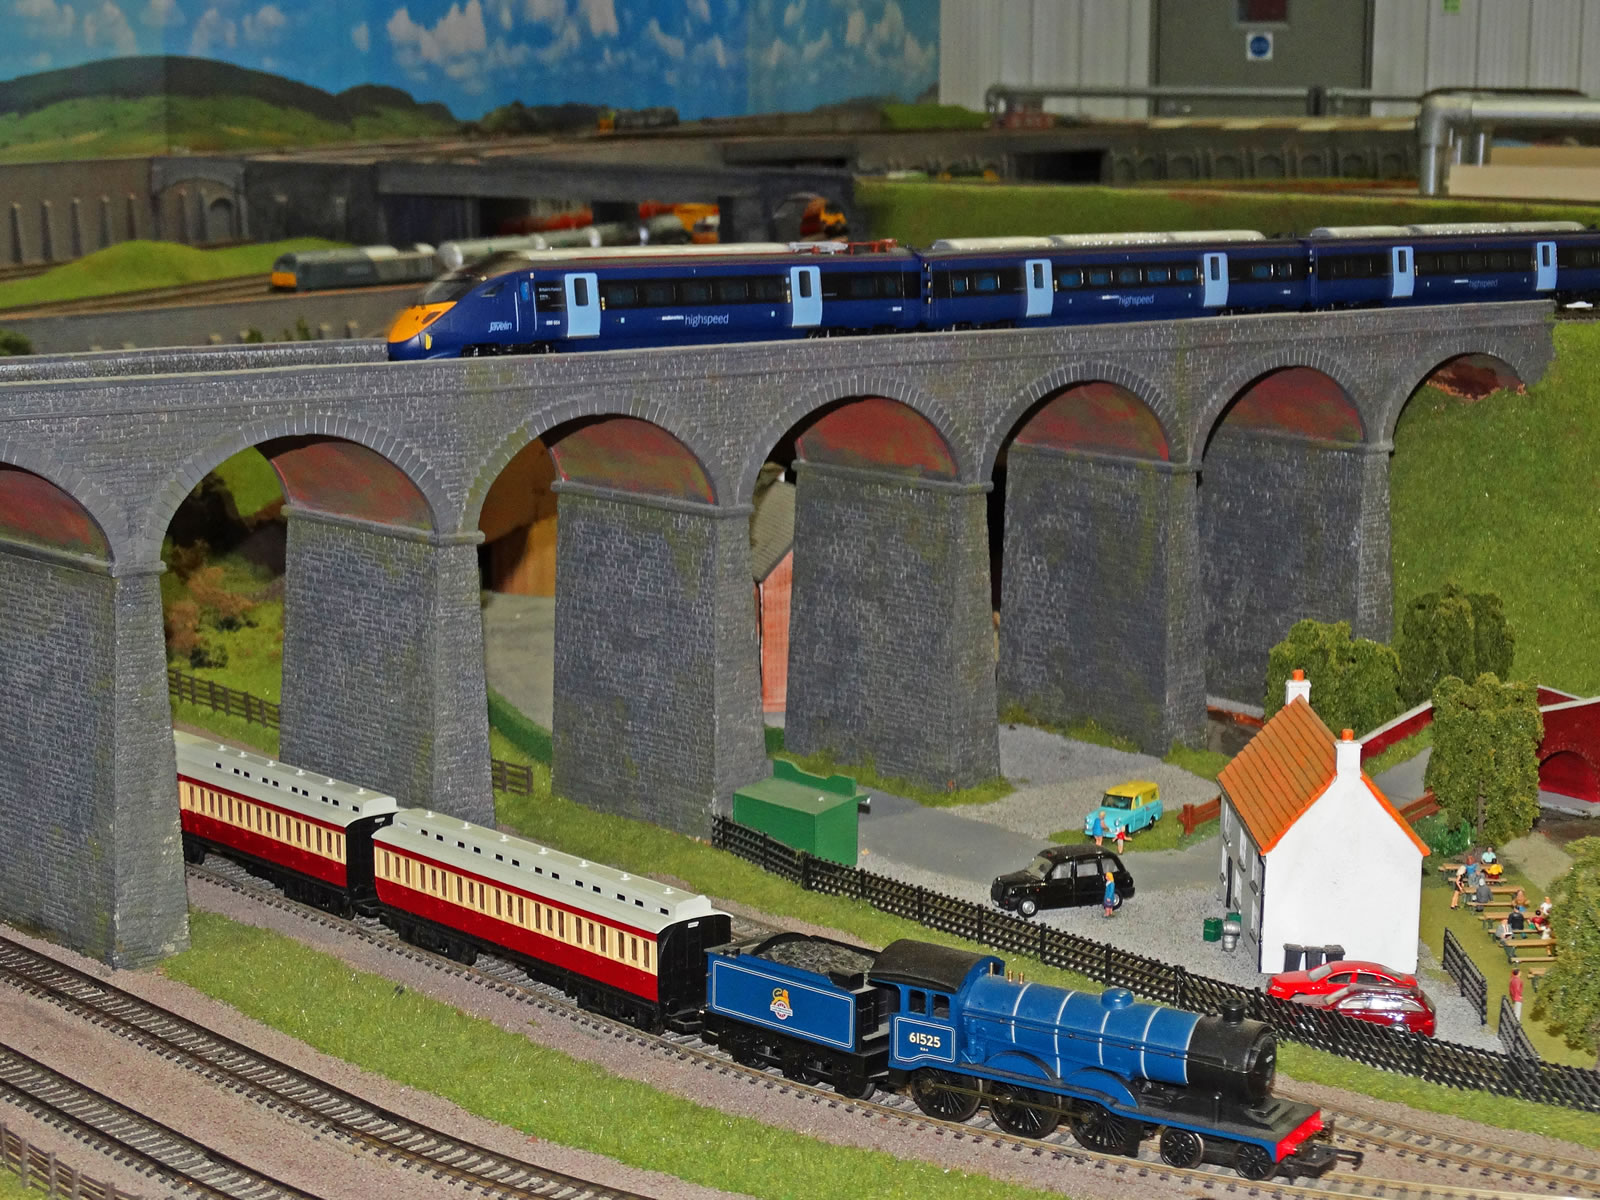 Trains represent all era's of the Great British railway